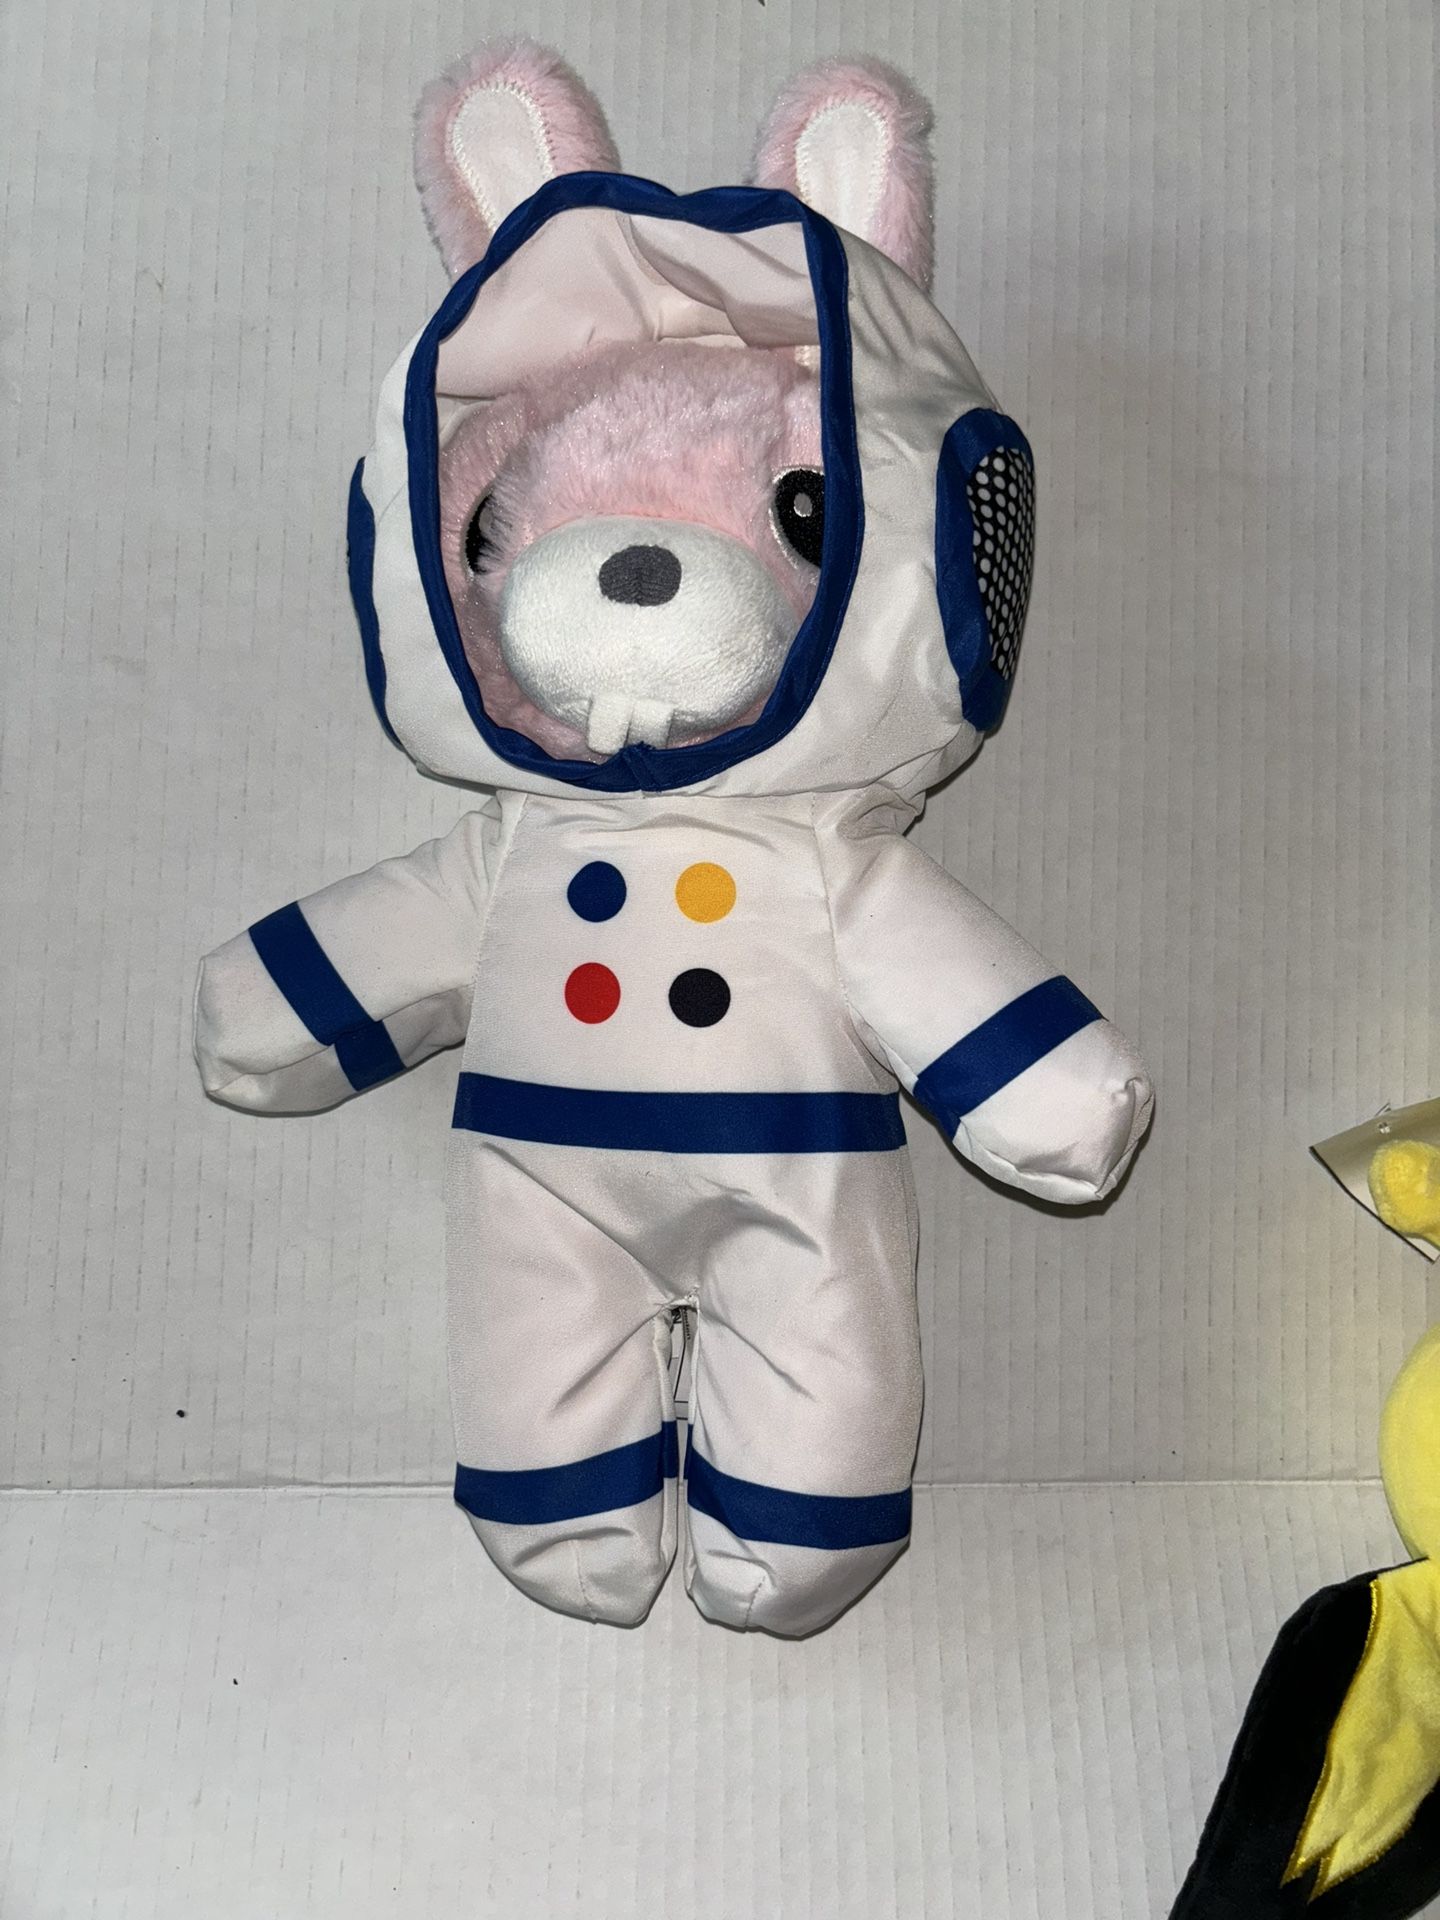 Ikea Aftonsparv Soft Pink Bunny Astronaut Plush